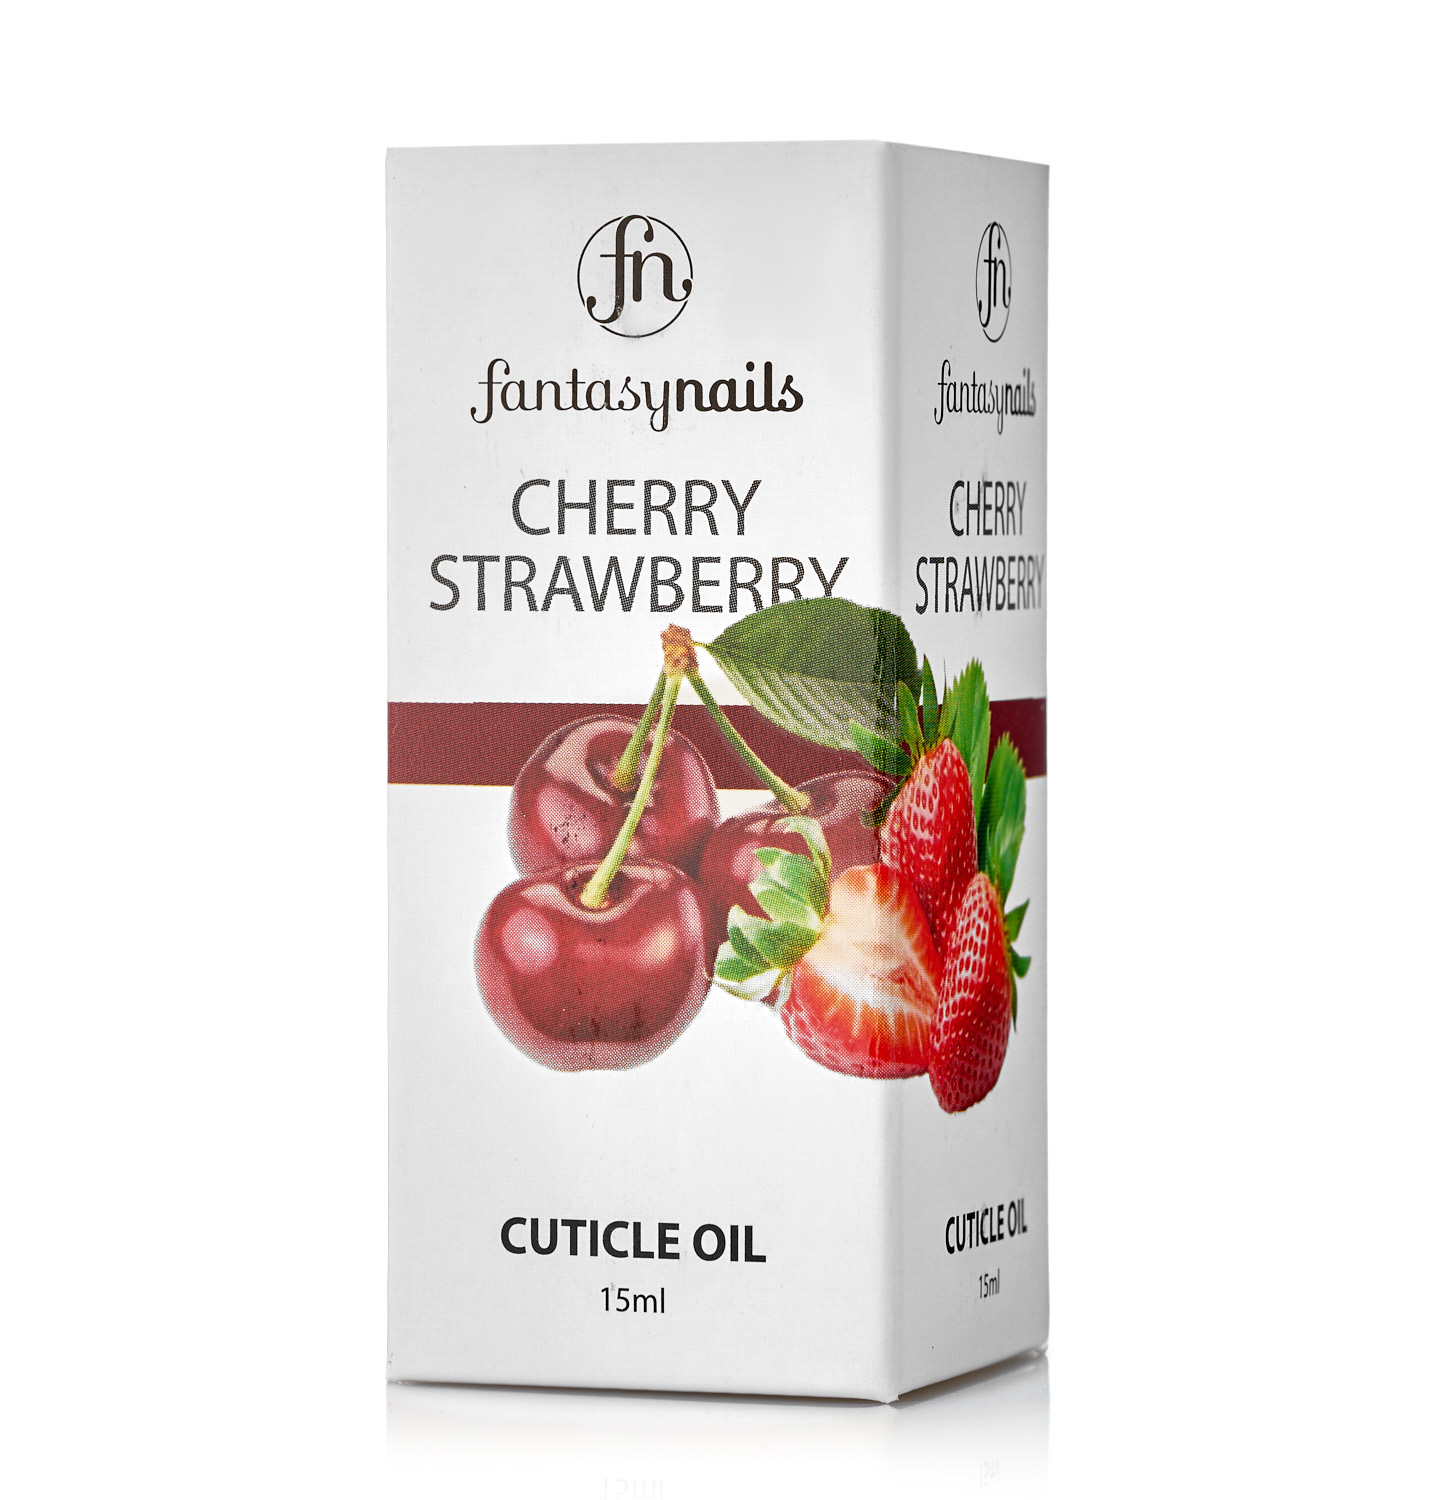 Масло для кутикулы Cherry/Strawberry («Вишня/Клубника») 15 ml из каталога Препараты для ногтей в интернет-магазине BPW.style